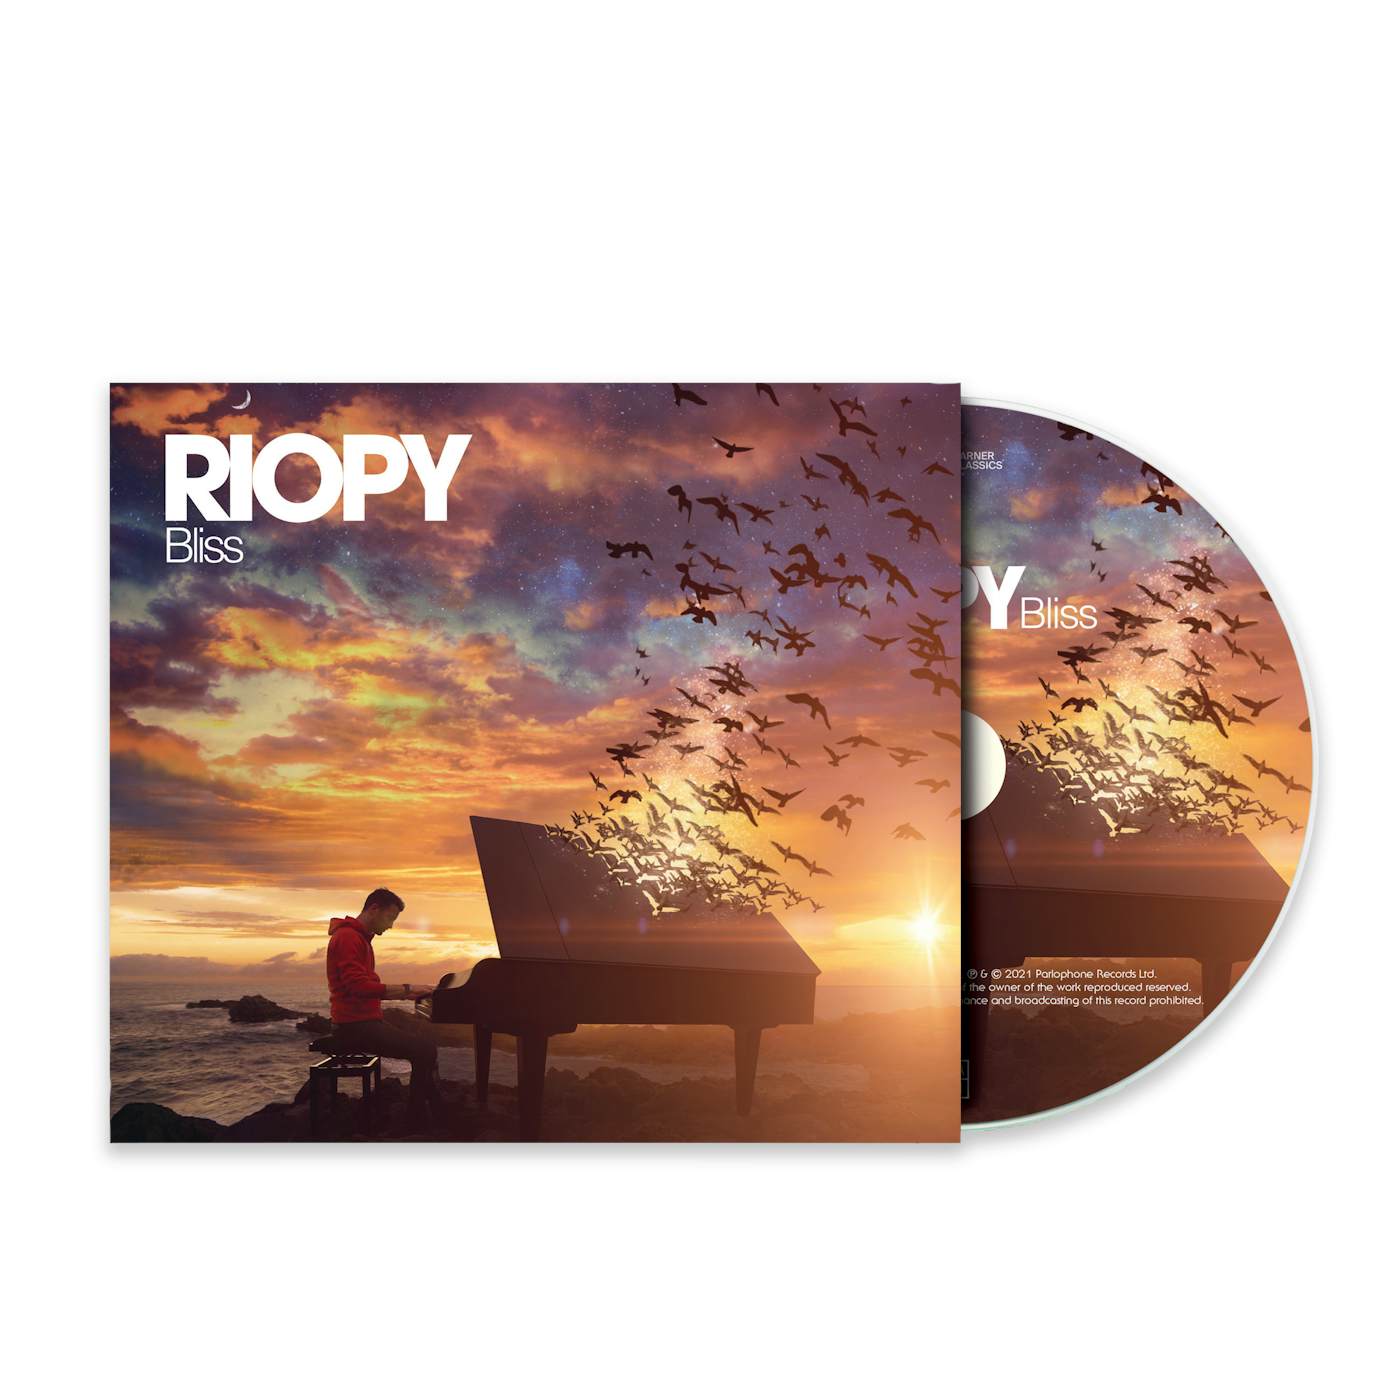 RIOPY Bliss CD